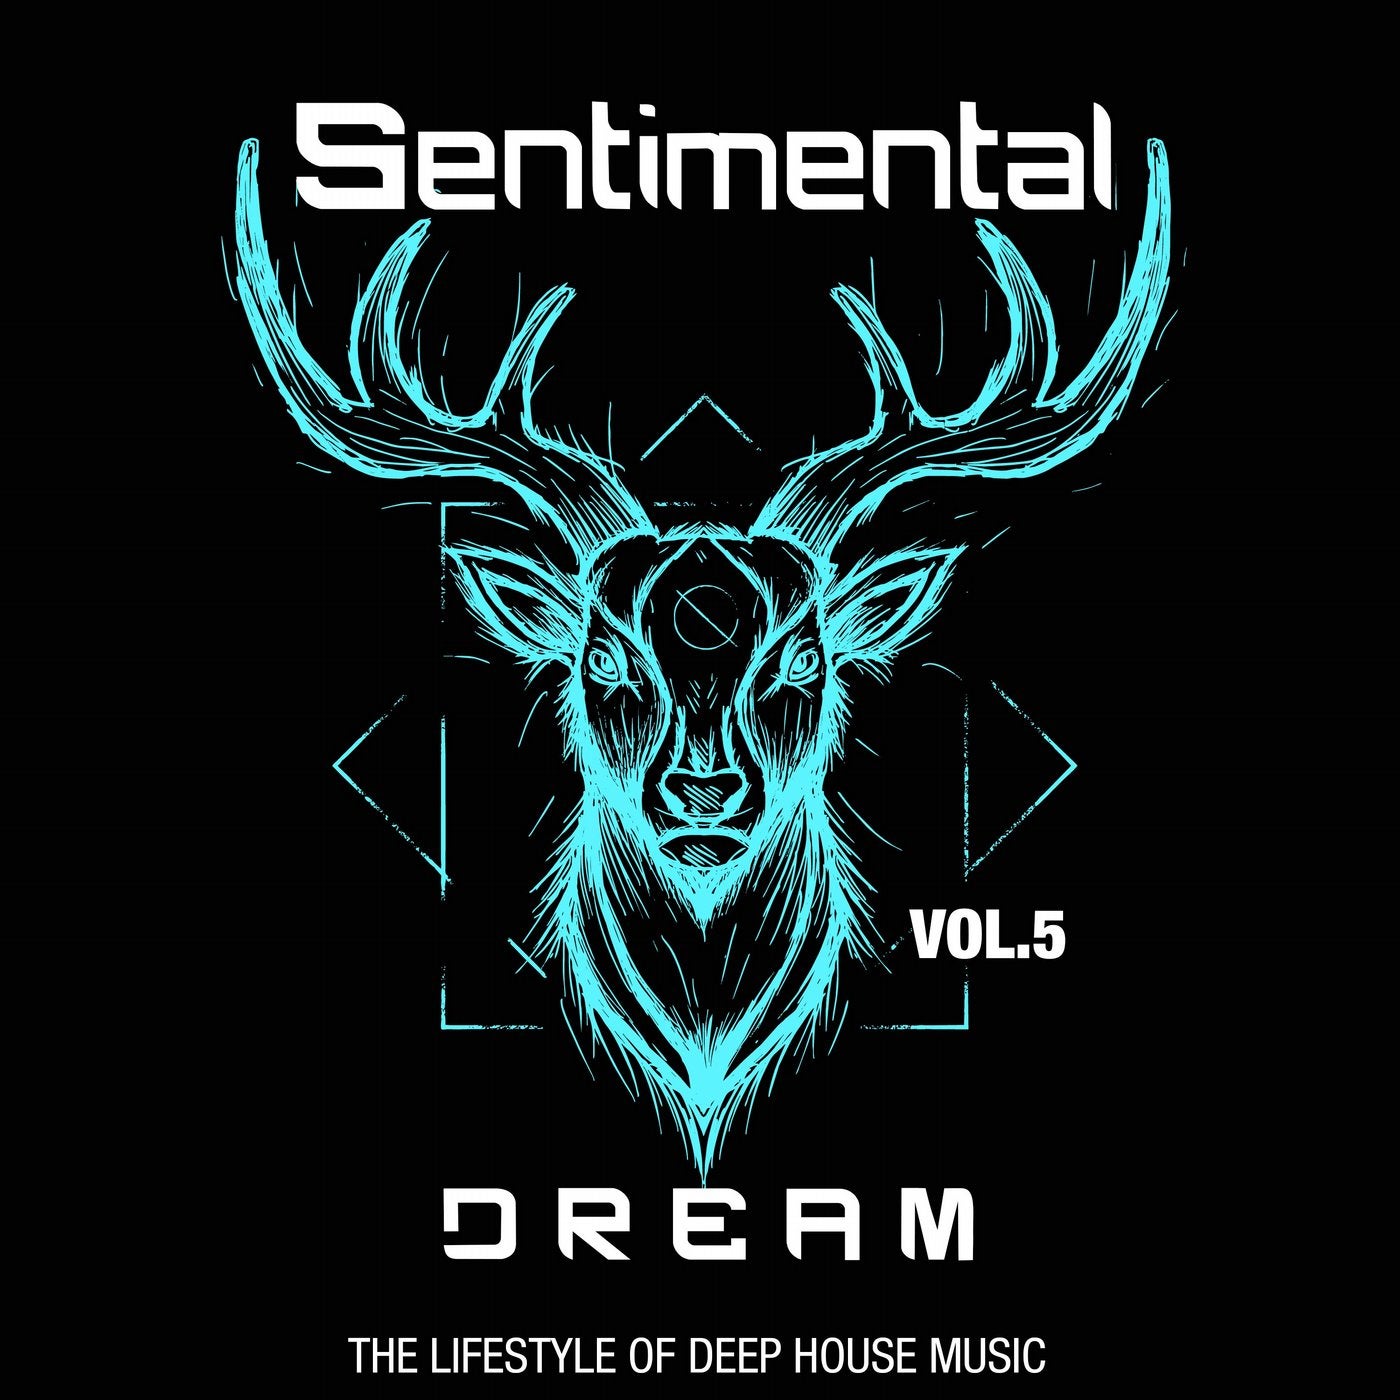 Sentimental Dream, Vol. 5 (The Lifestyle of Deep House Music)